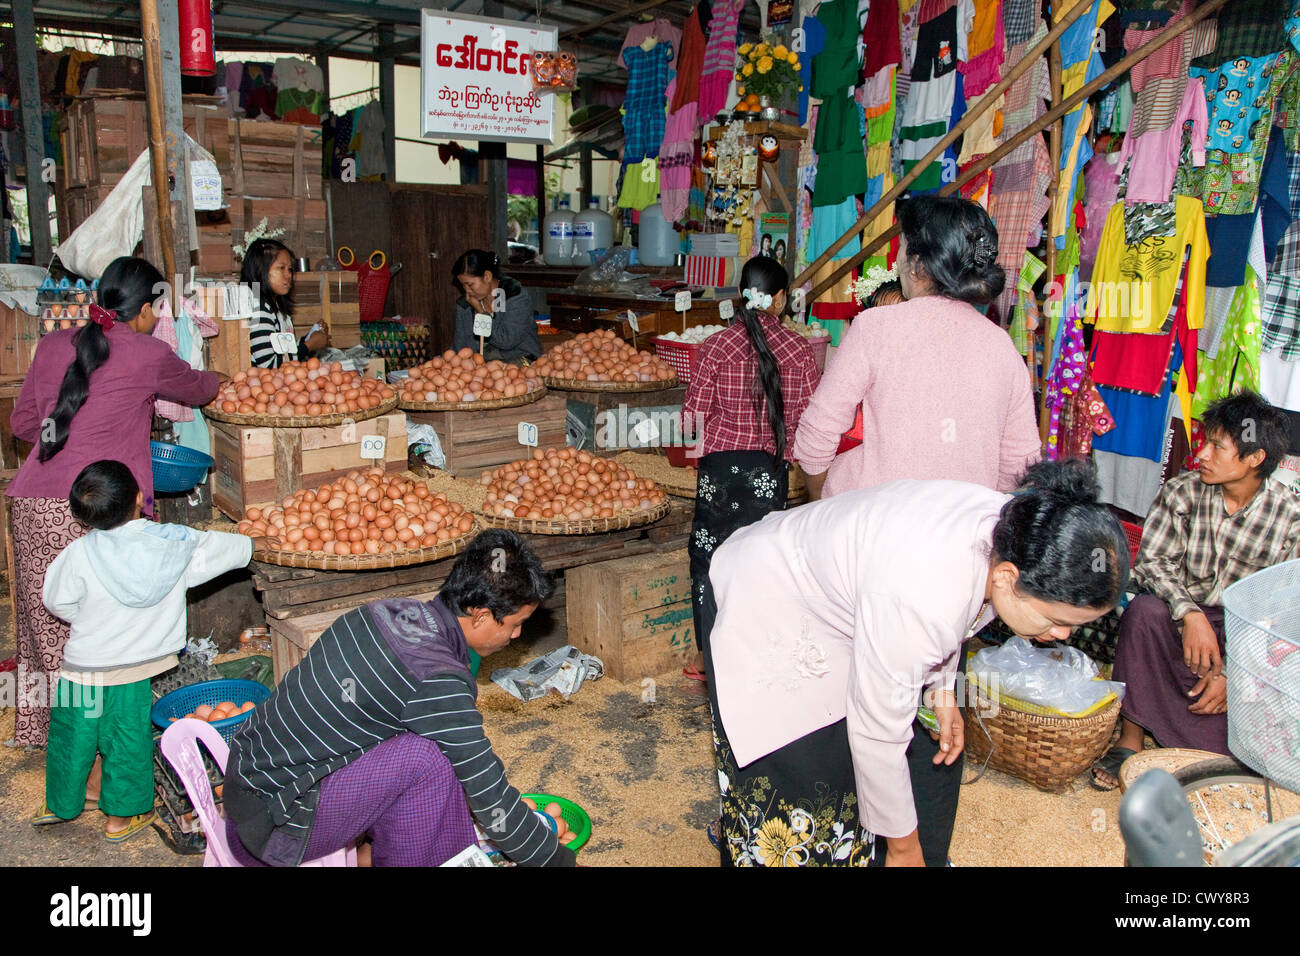 Myanmar, Burma. Mandalay Market, Stall Selling Eggs and Clothing. Stock Photo